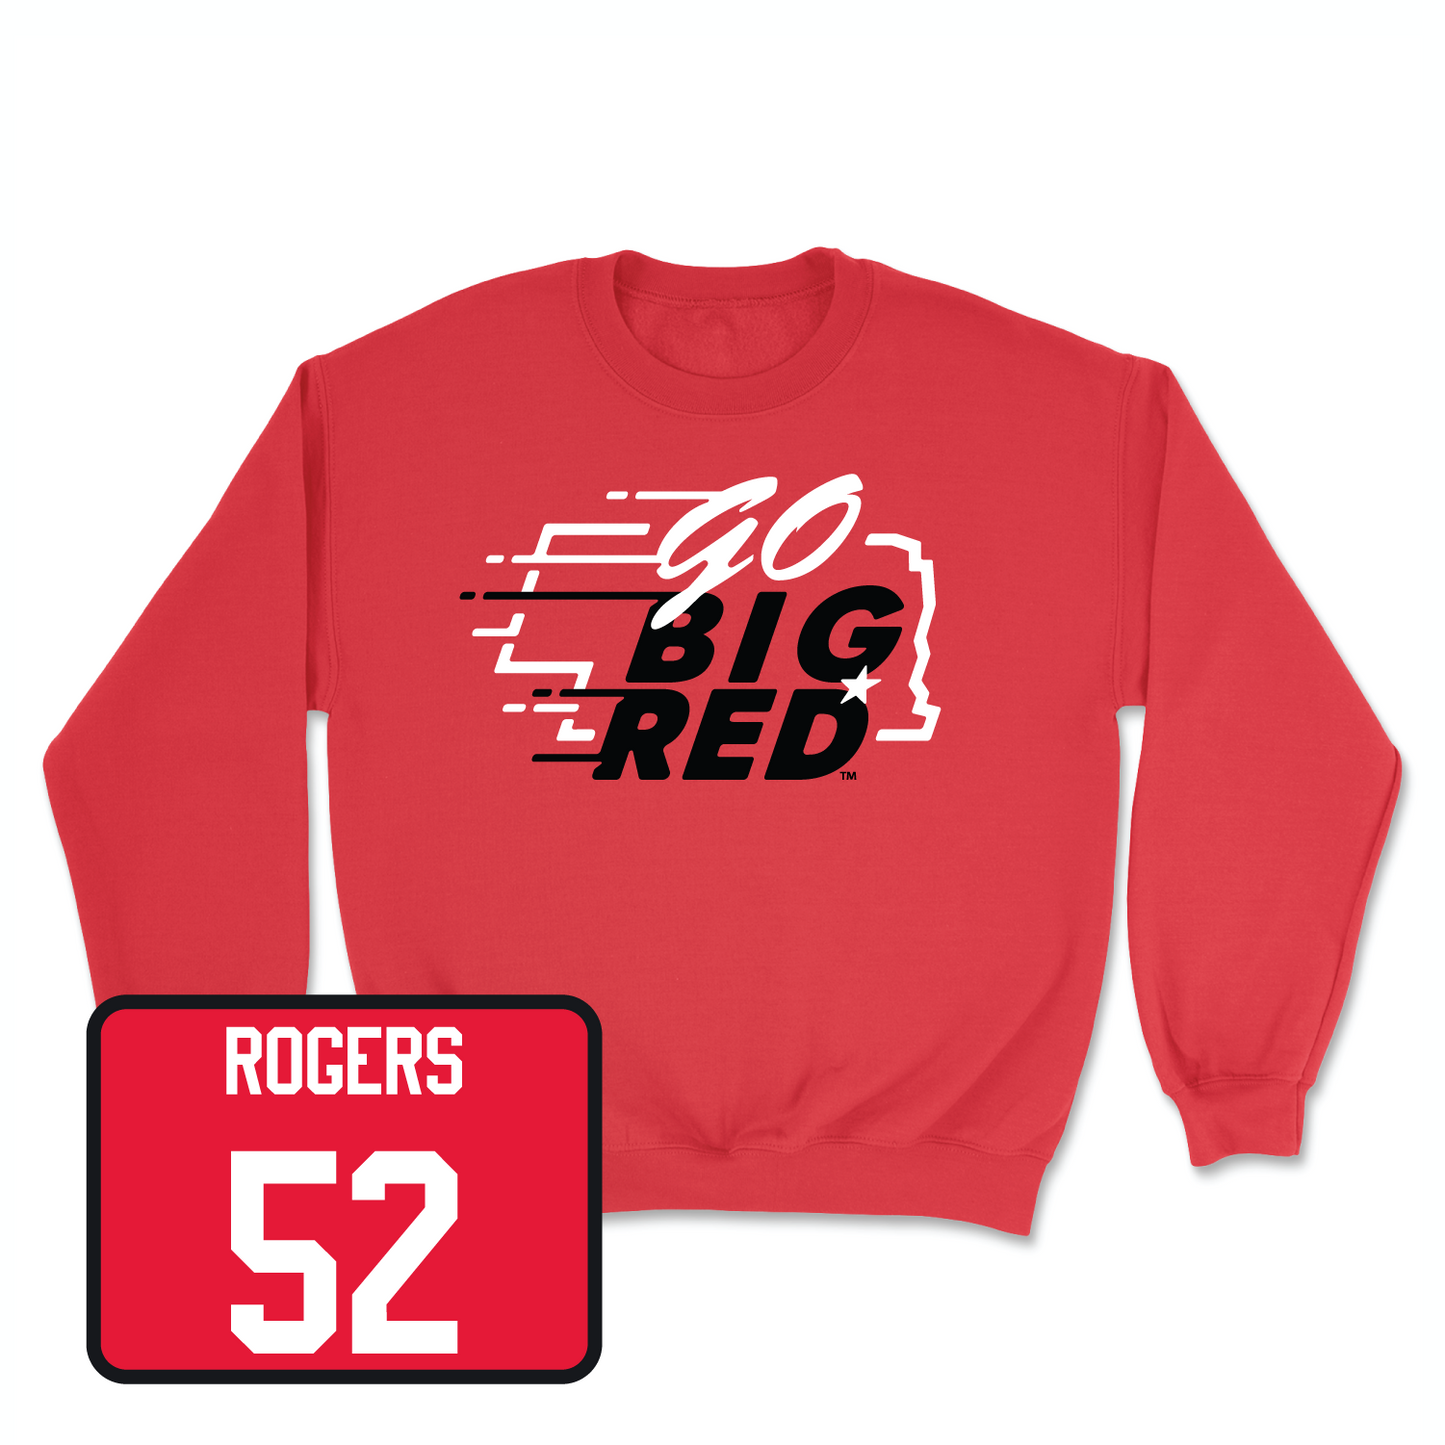 Red Football GBR Crew Medium / Dylan Rogers | #52